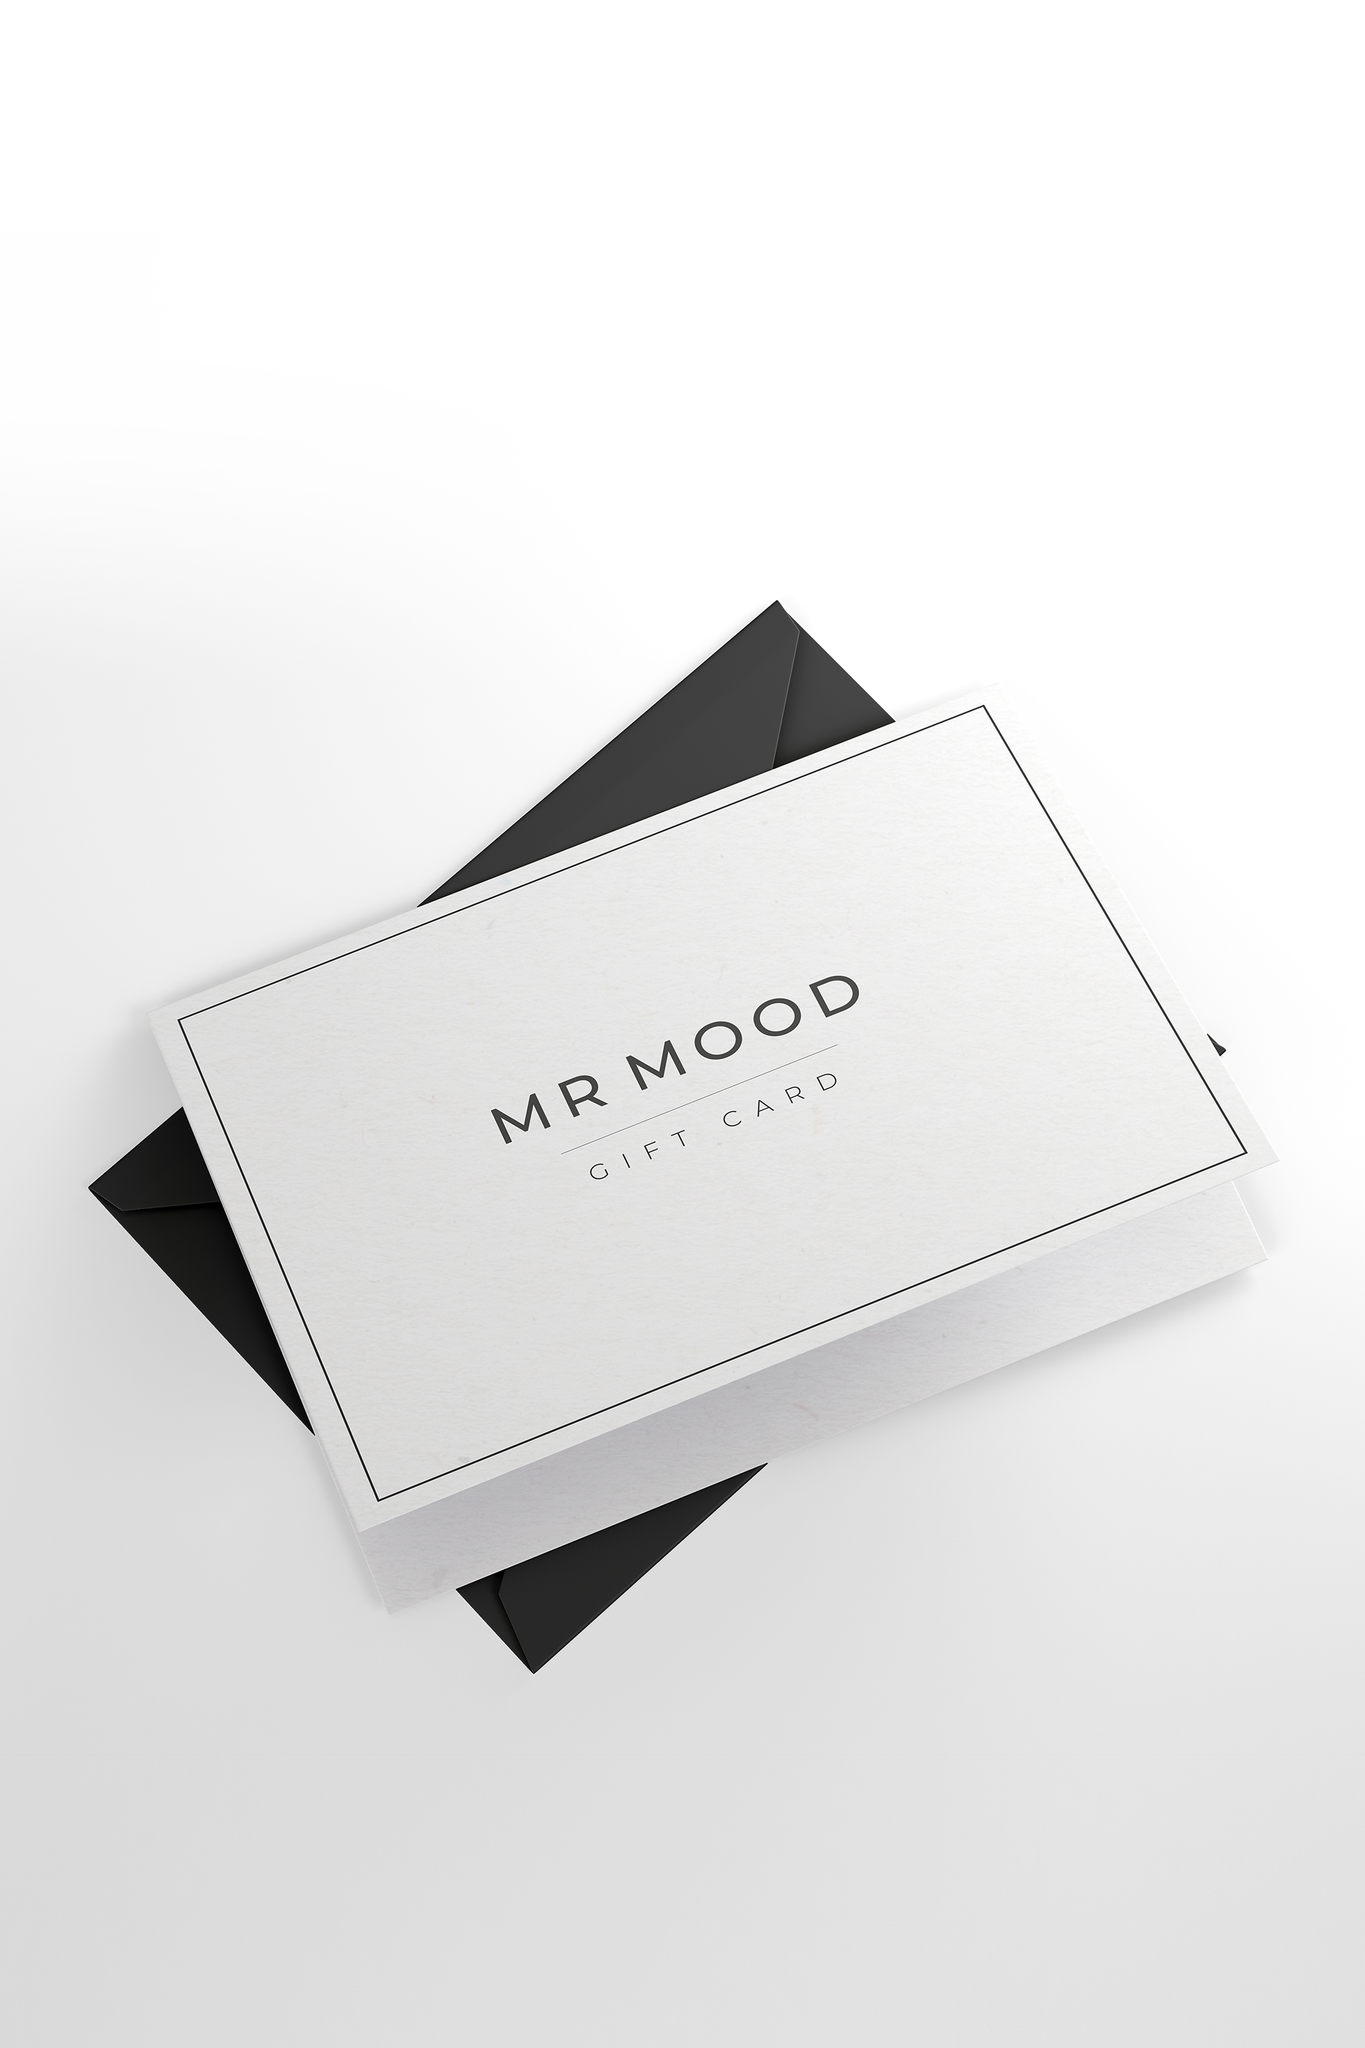 Mr. Mood Gift Card